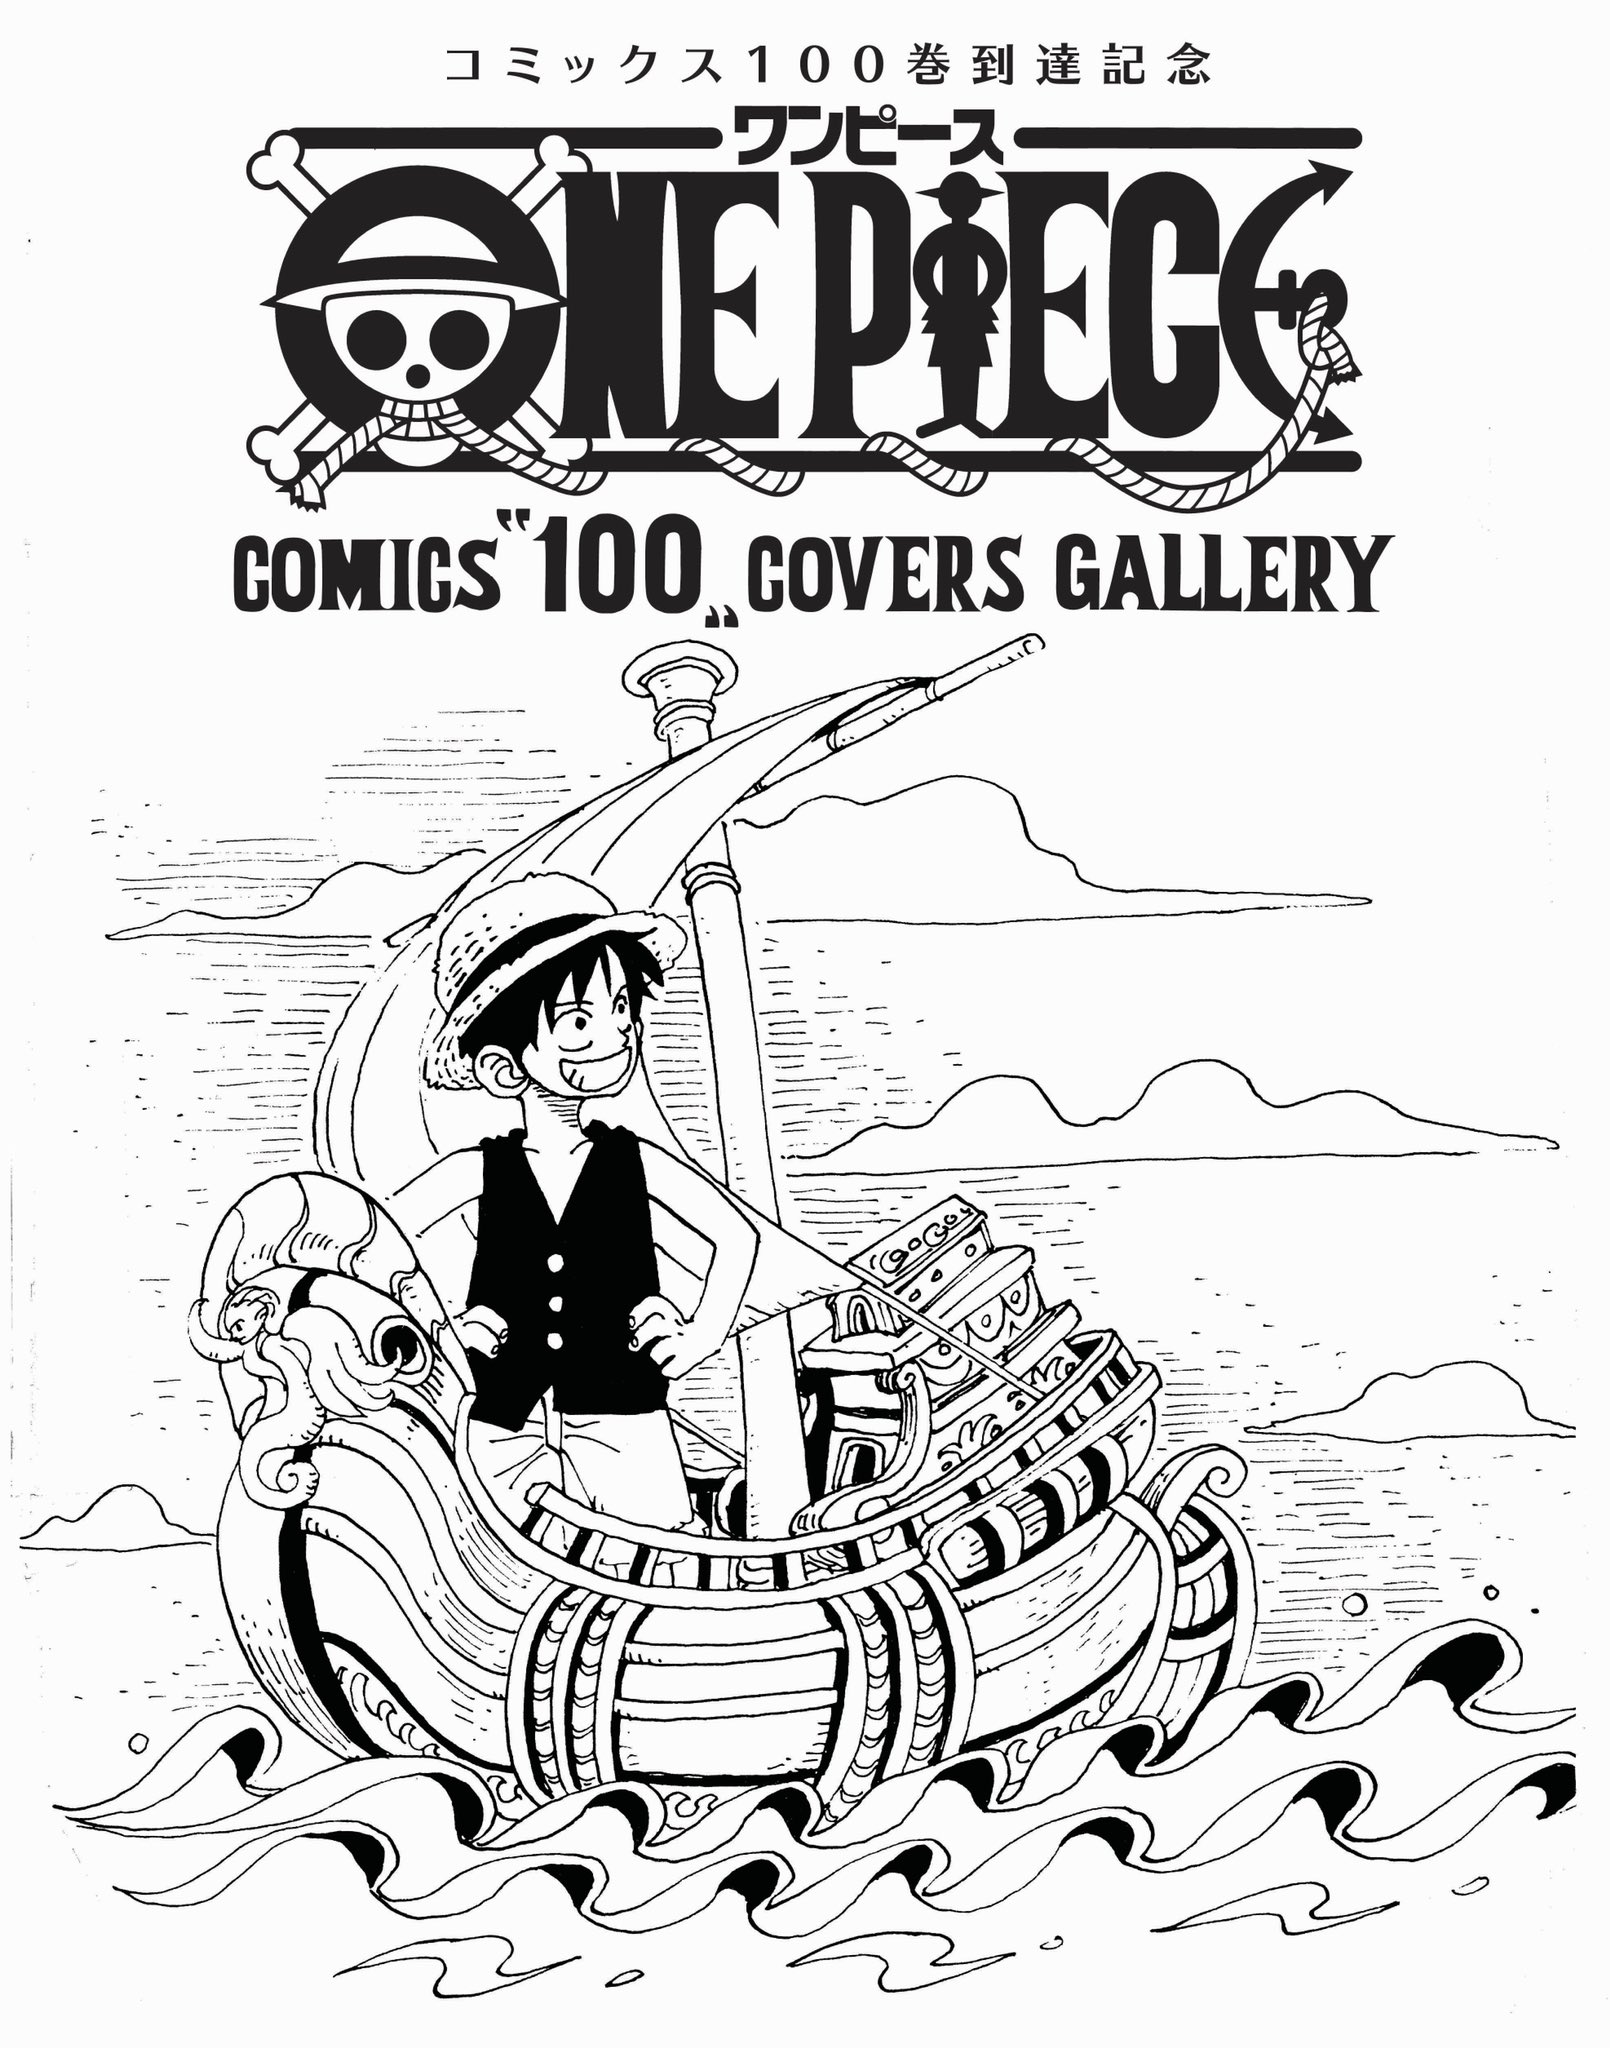 One Piece スタッフ 公式 Official 解禁 原画展 In フジテレビ 1 100巻の表紙複製原画展 One Piece Comics 100 Covers Gallery 開催決定 期間は10 30 来年1 30まで フジテレビ本社にて 入場無料で鑑賞できます